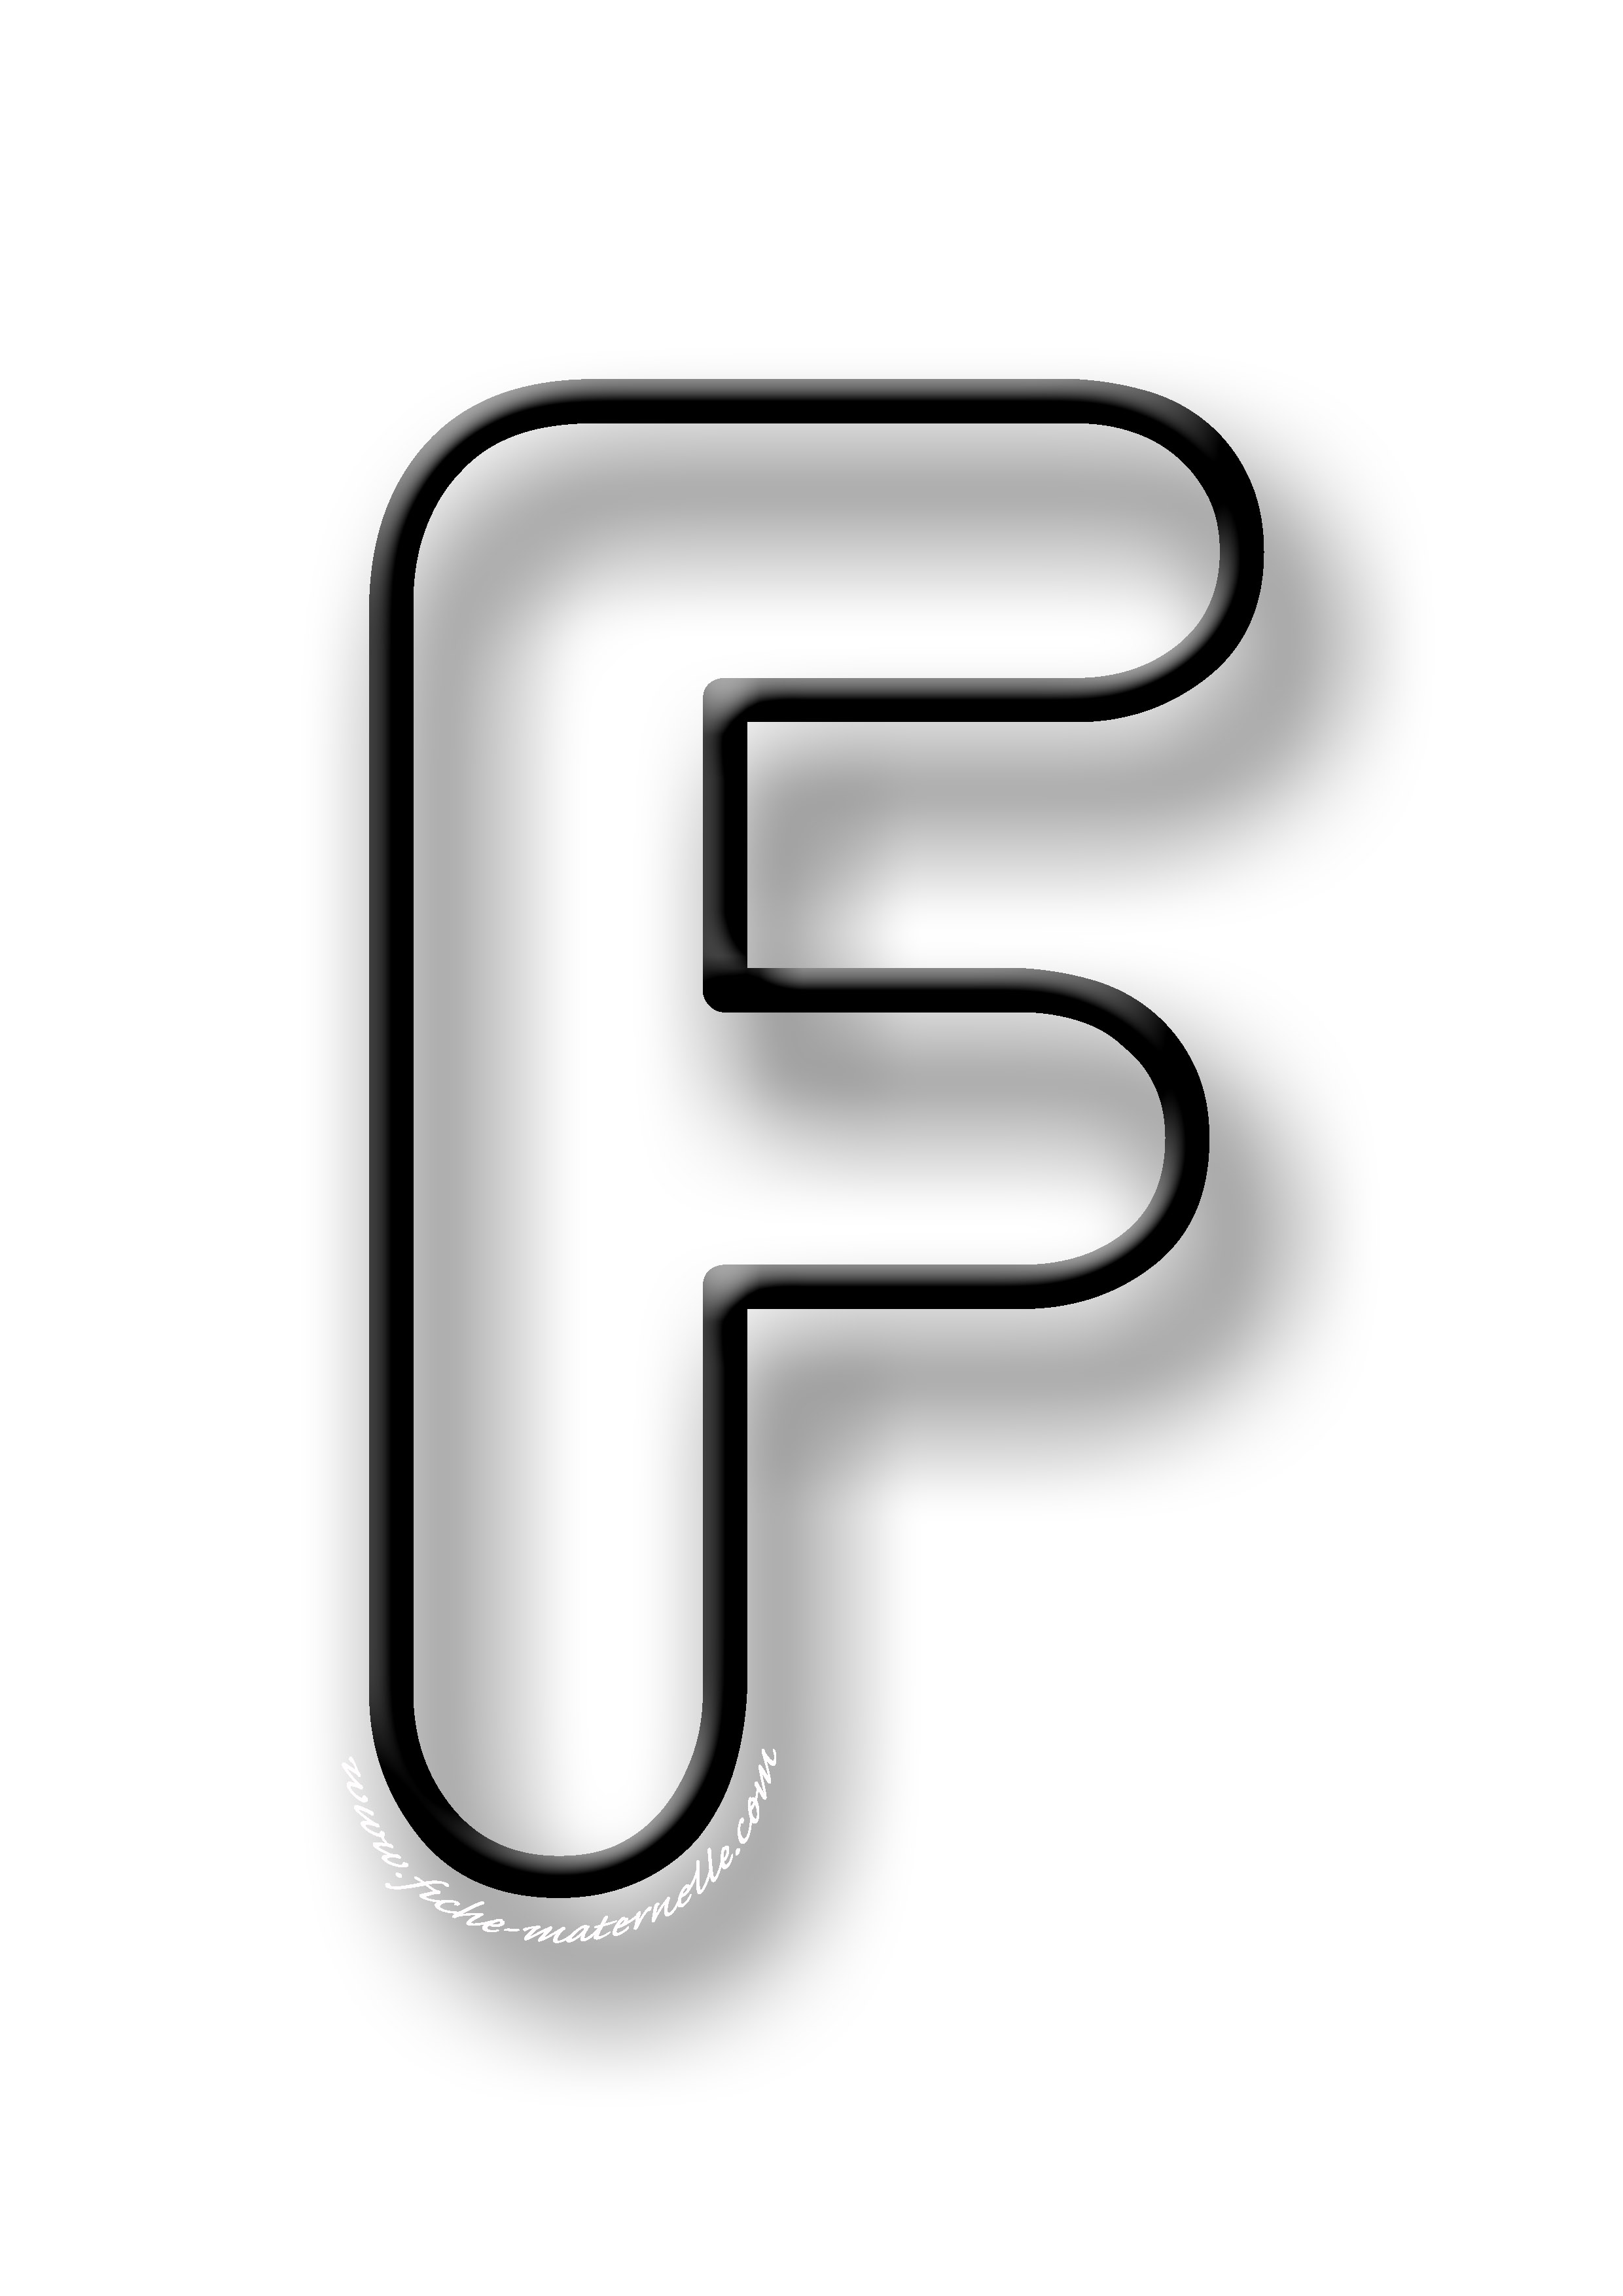 Coloriage de la lettre F